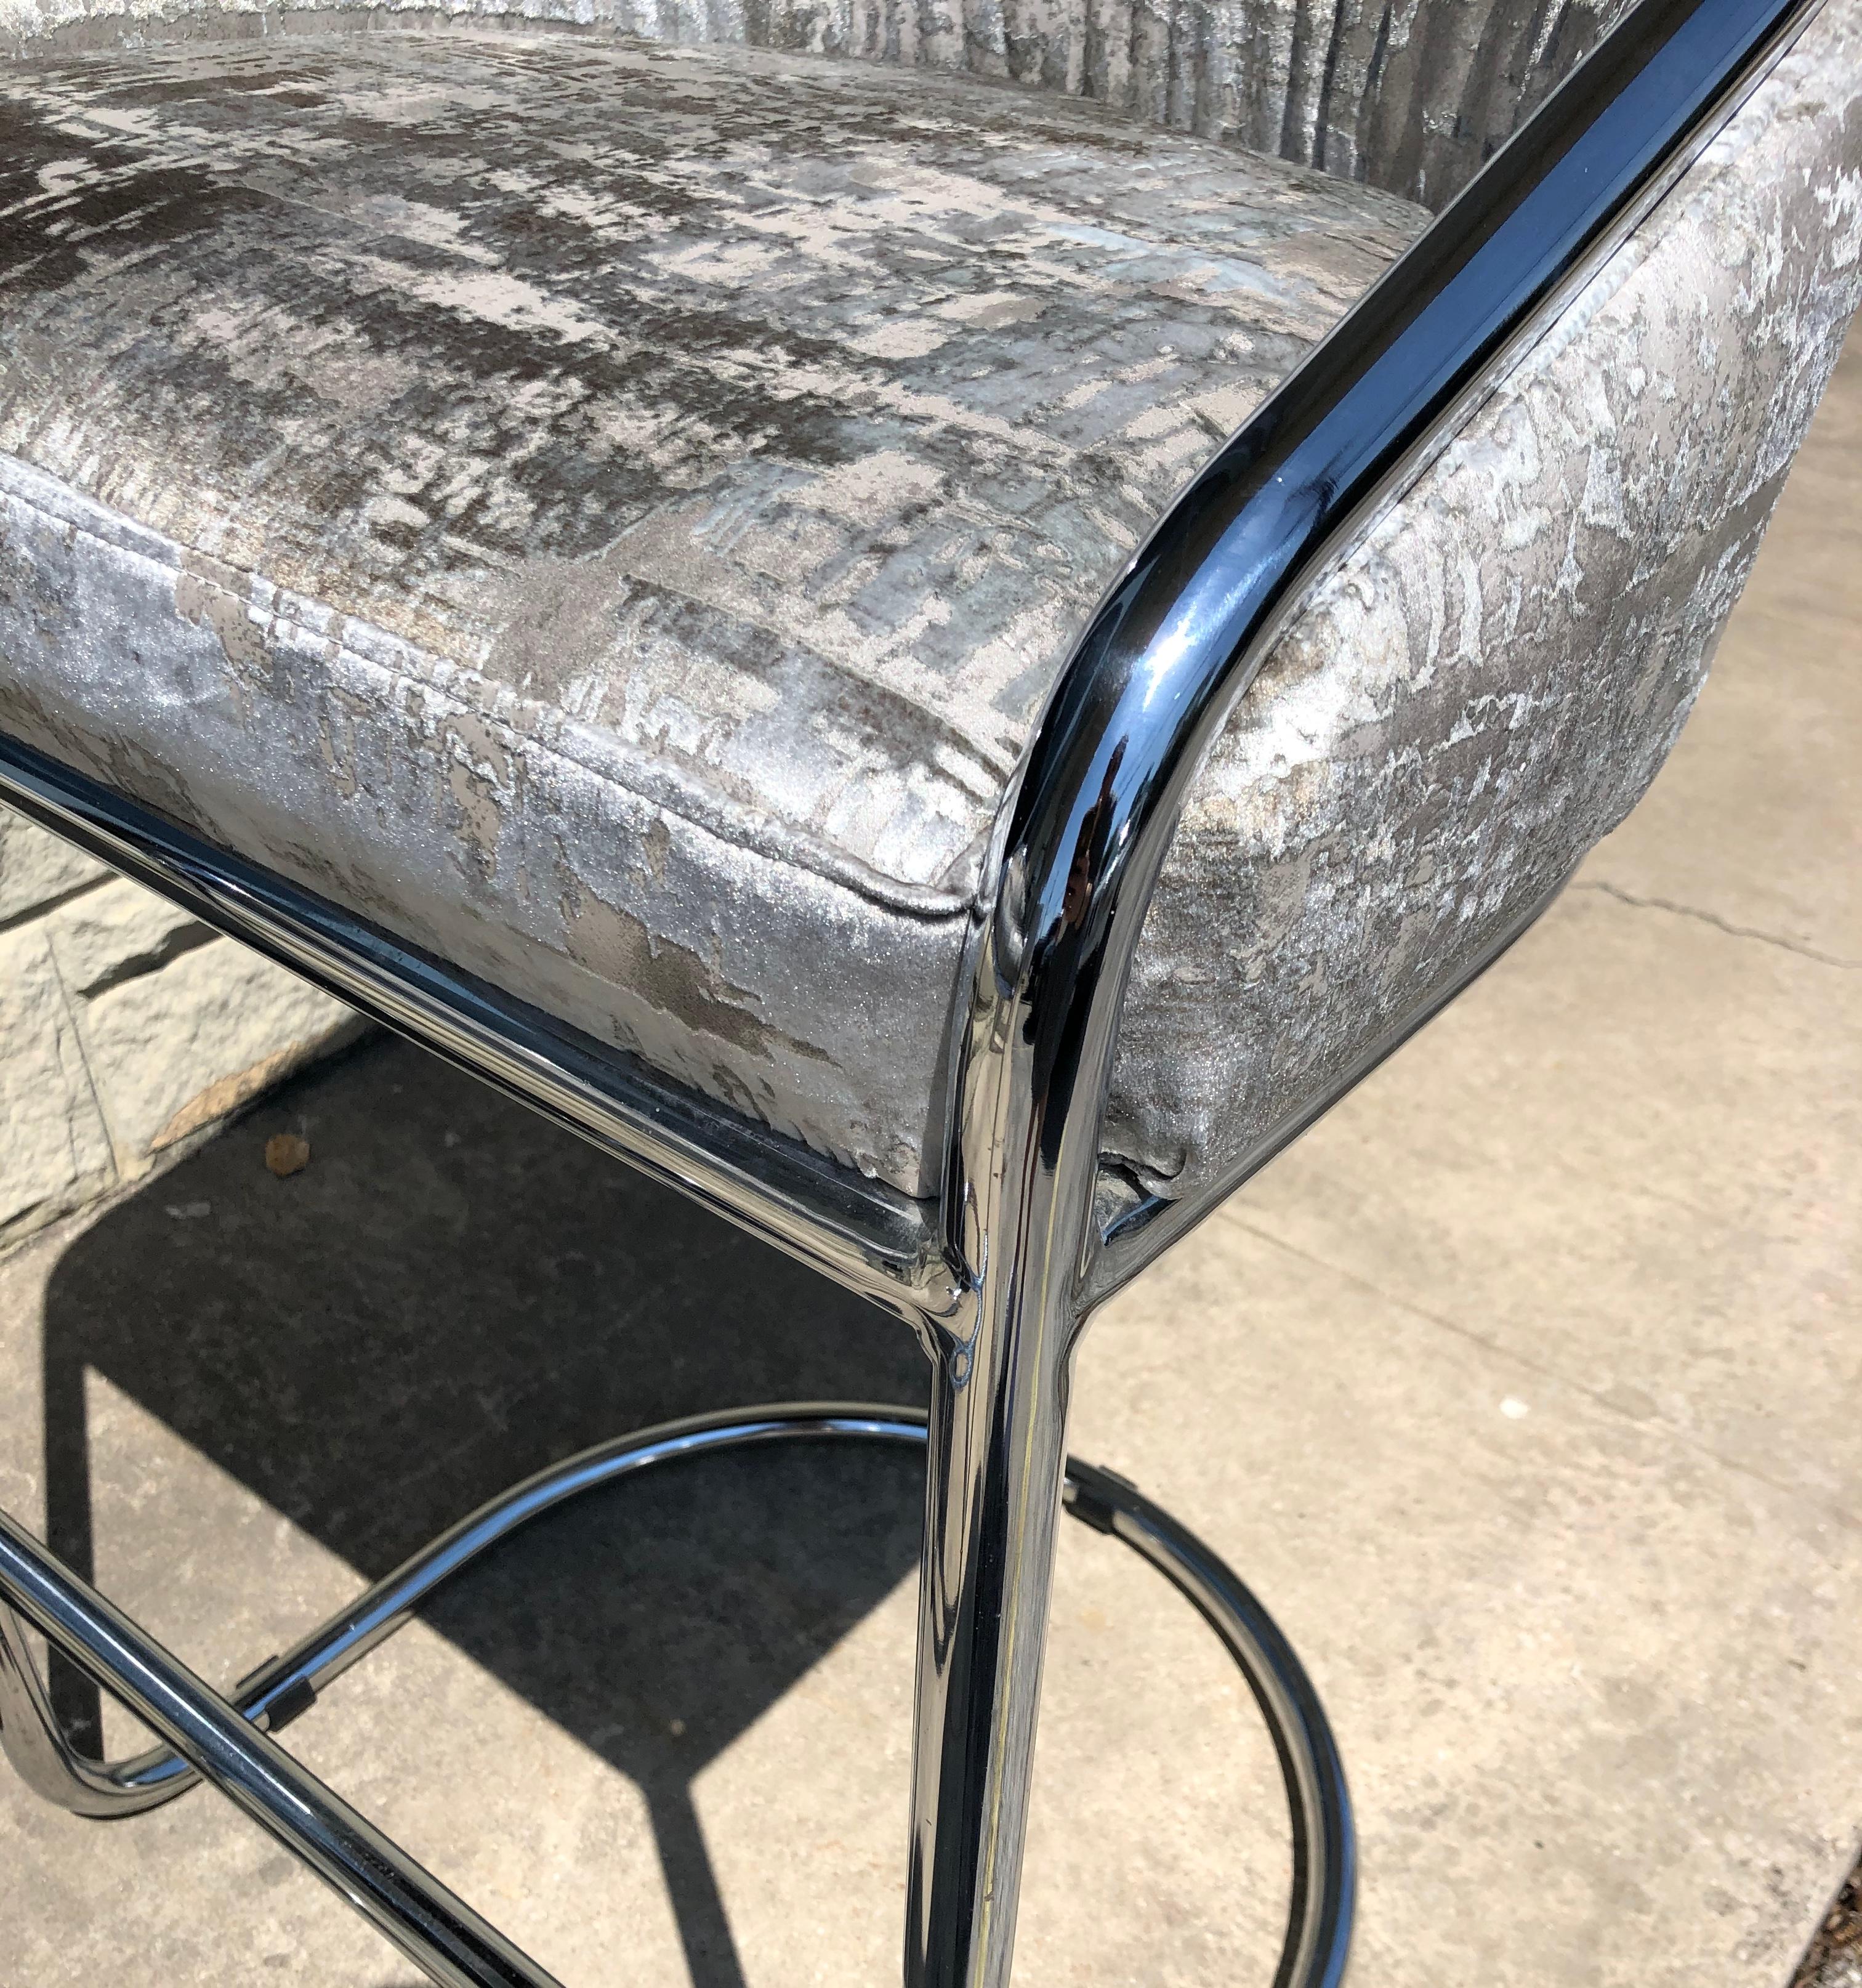 vintage chrome bar stools